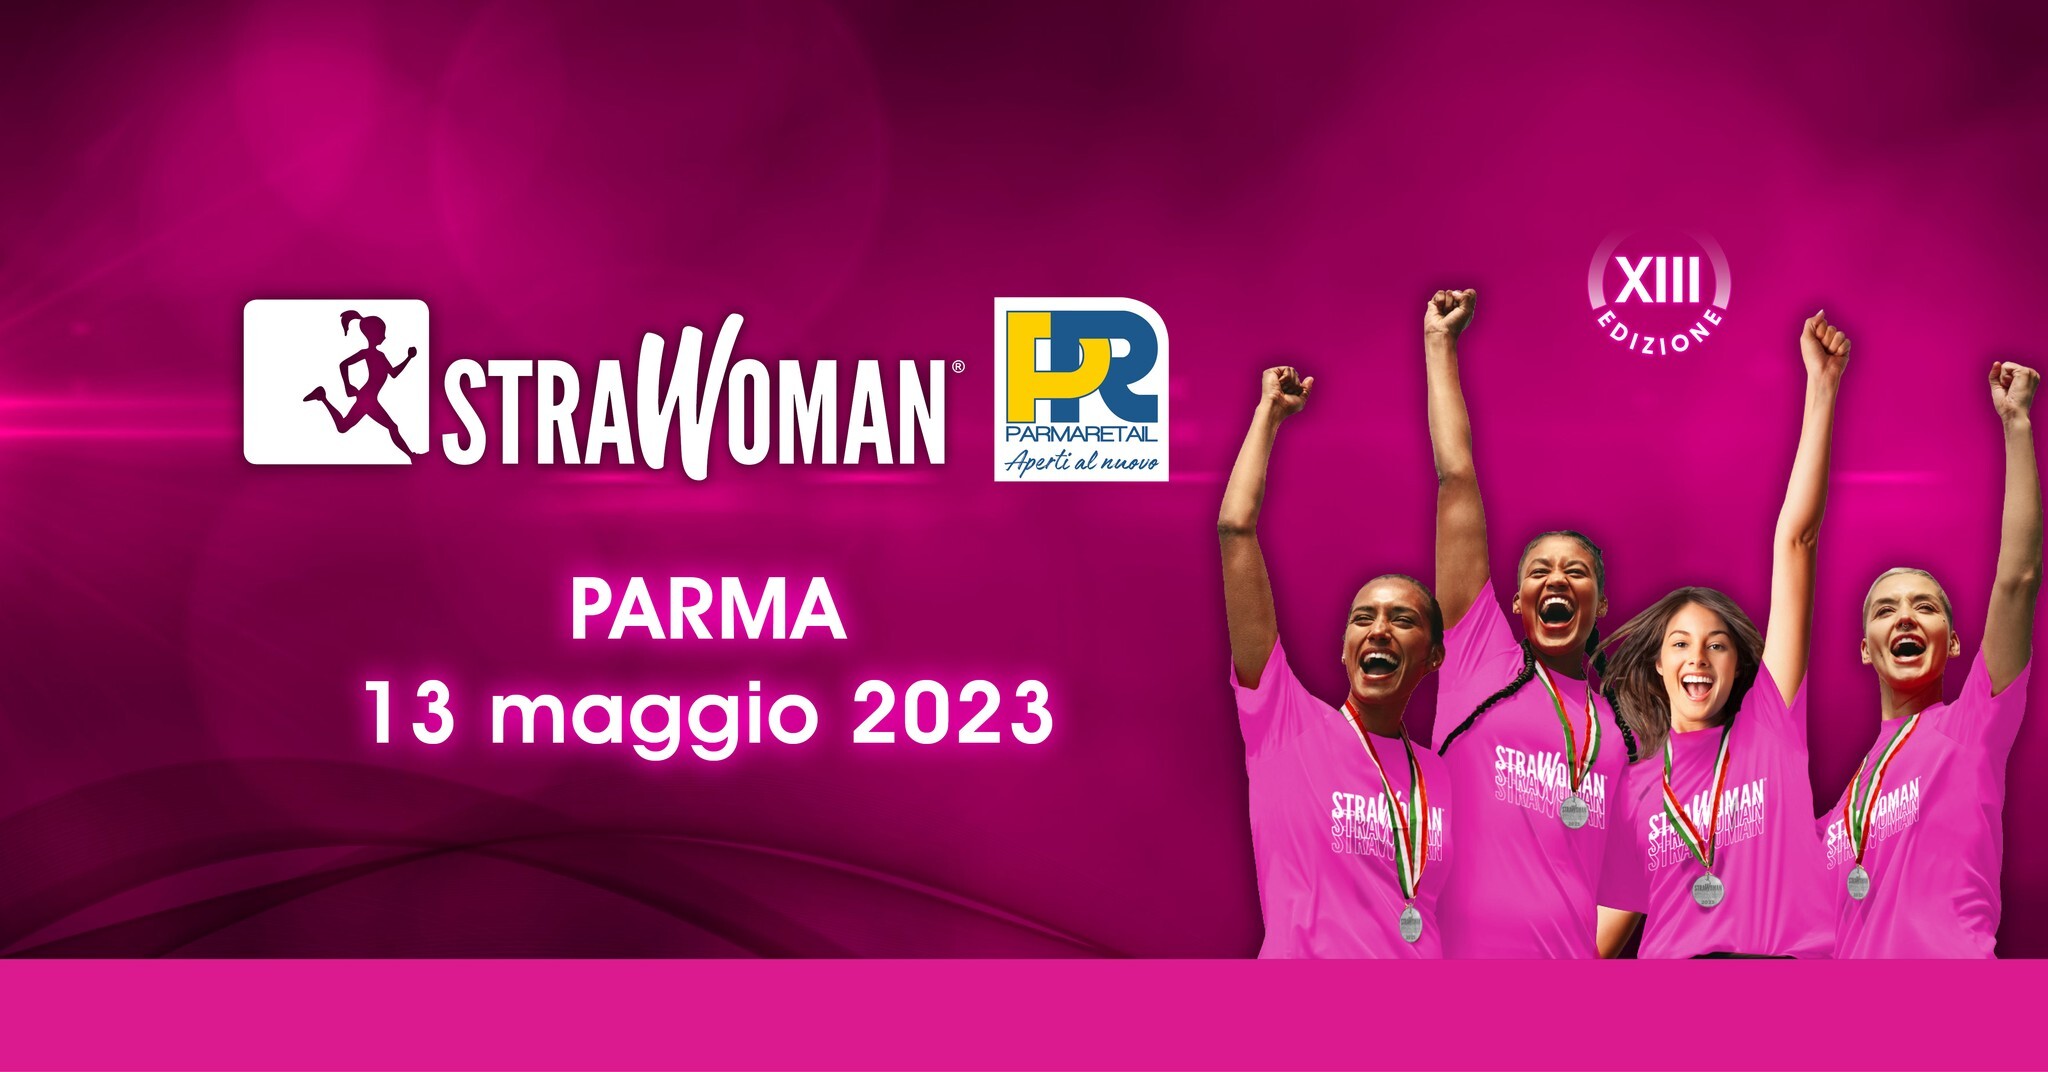 Parma - StraWoman Parma Retail